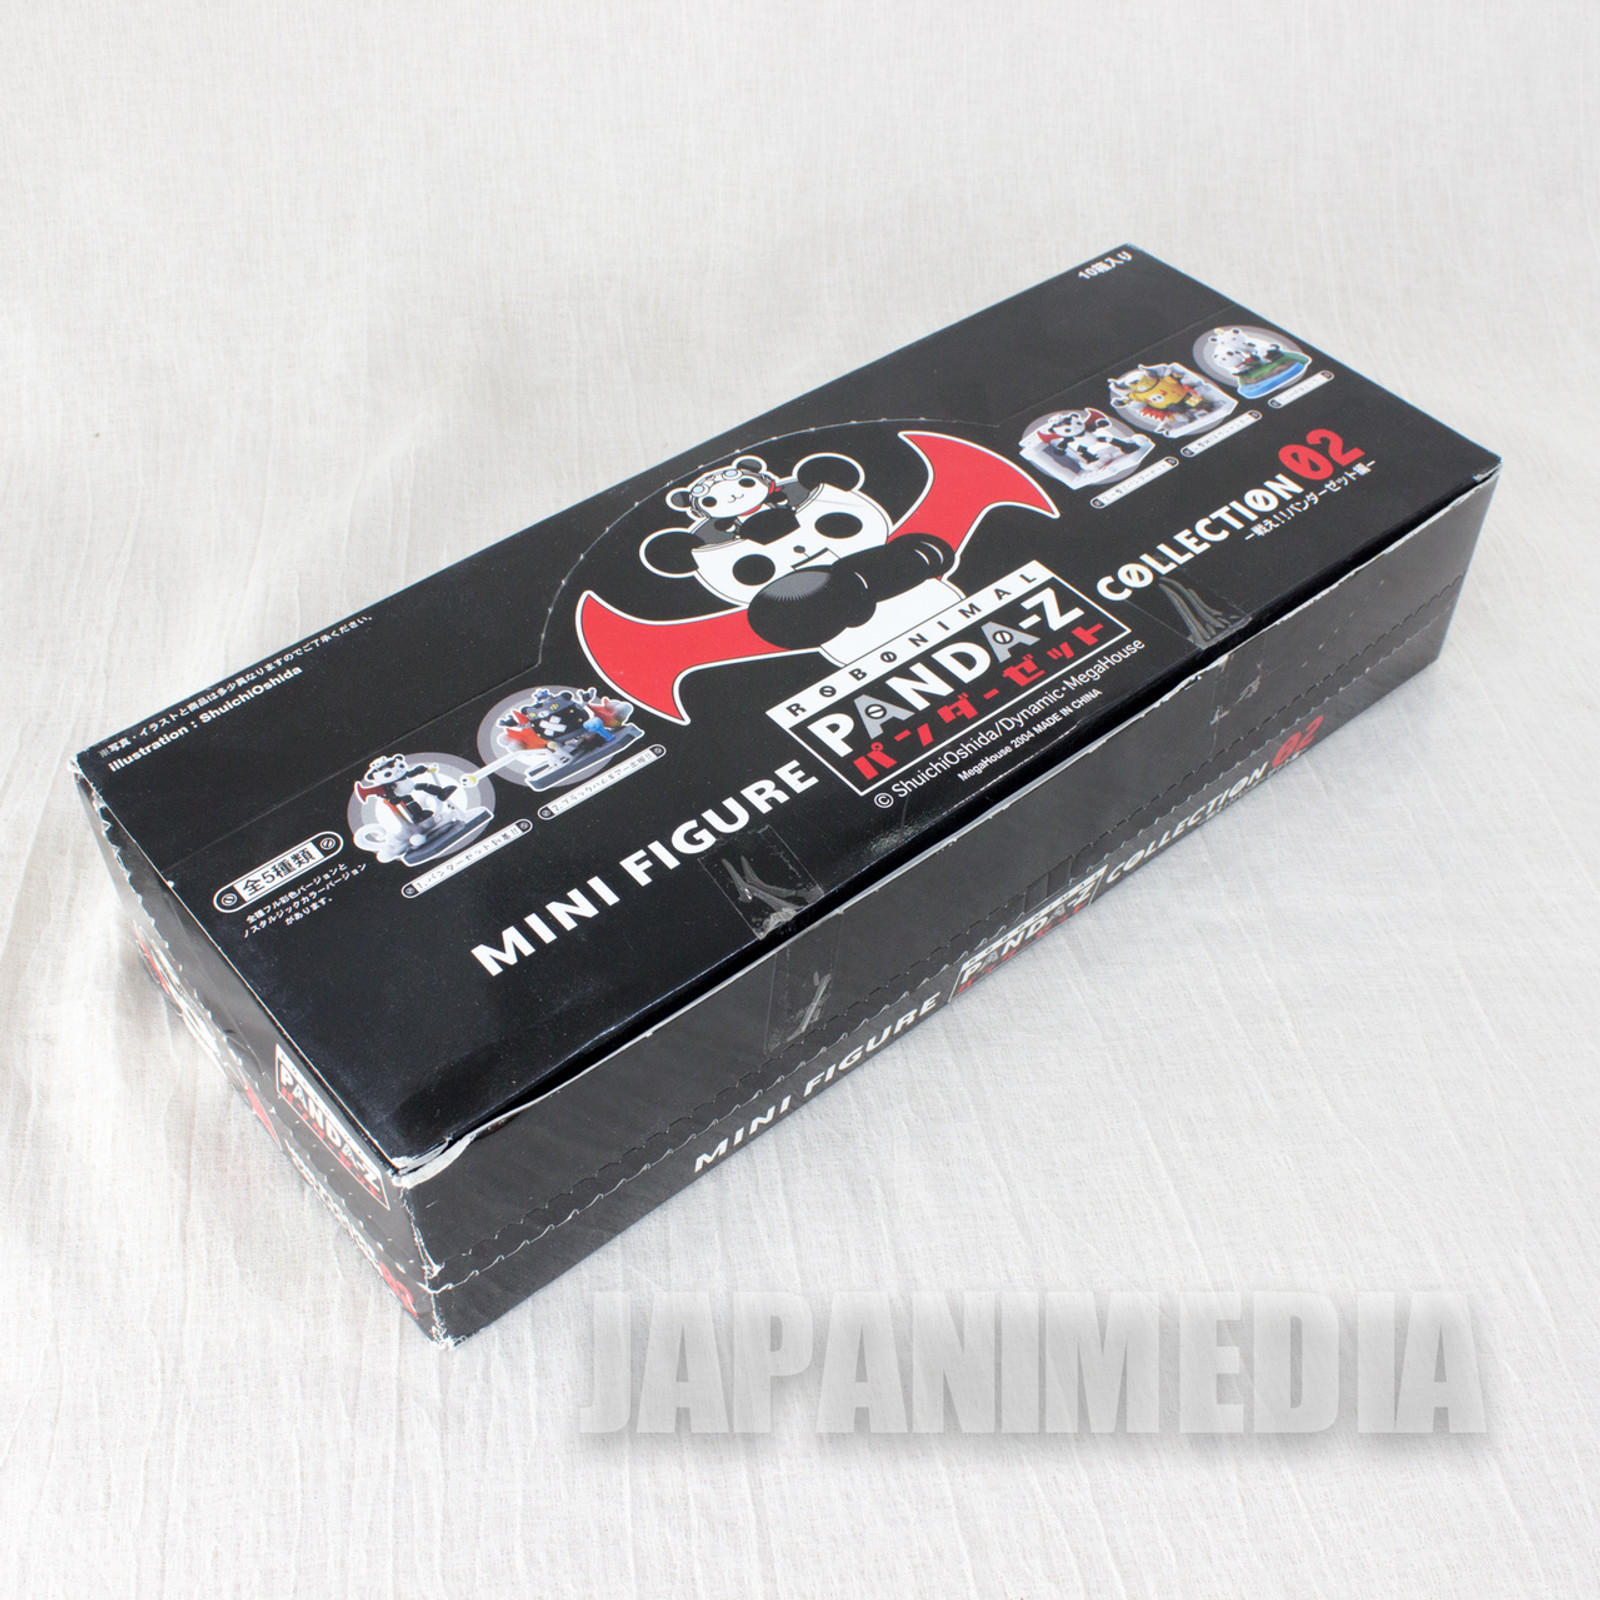 Set of 10] Panda-Z Mini Figure Collection 02 Robonimal Megahouse JAPAN  ANIME - Japanimedia Store